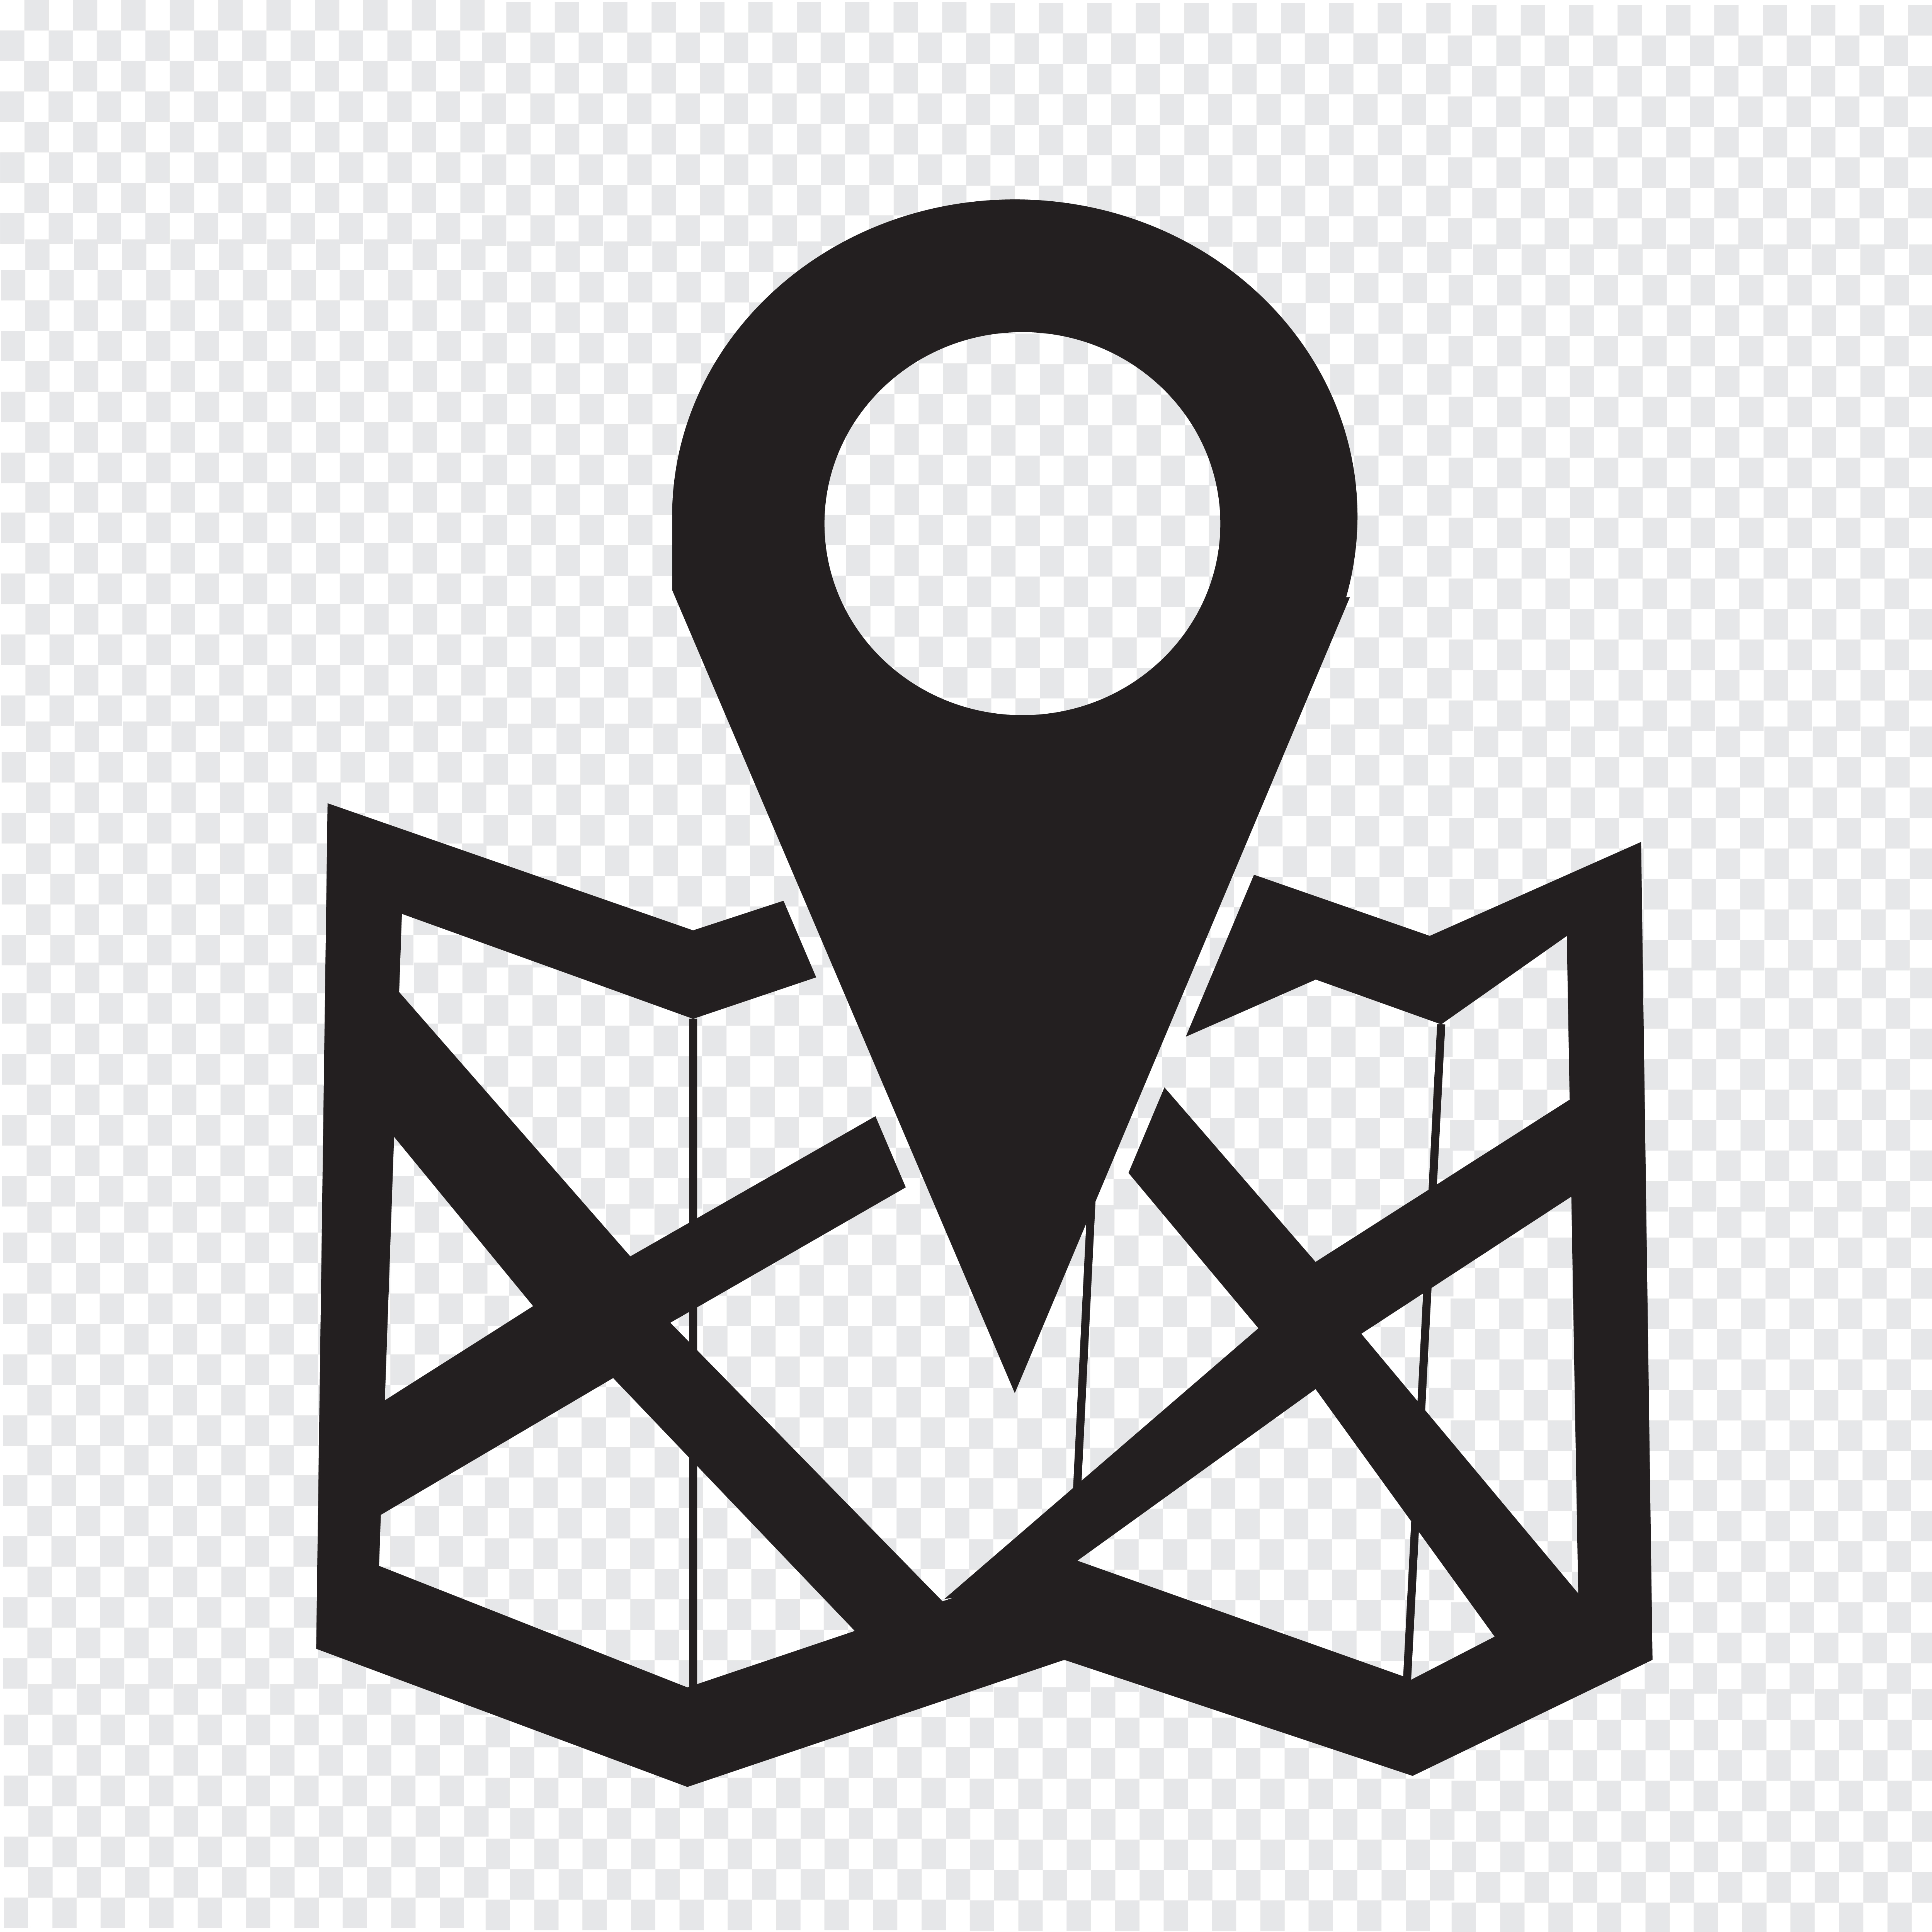 Download location icon symbol sign - Download Free Vectors, Clipart Graphics & Vector Art